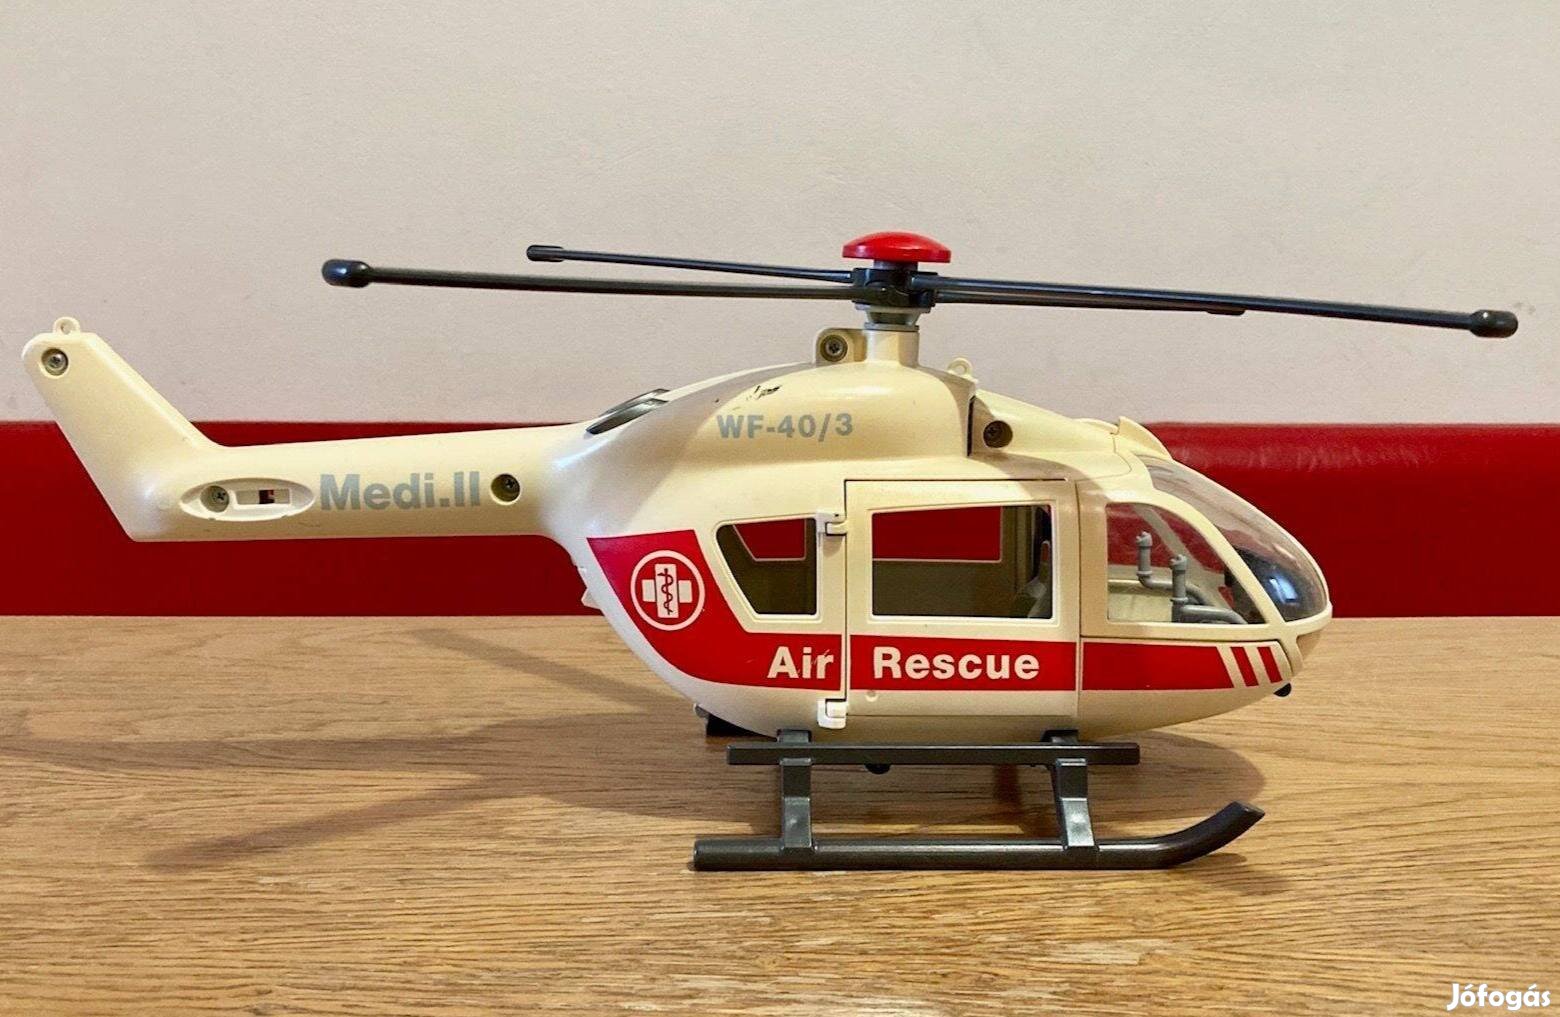 Playmobil Air Rescue nagy mentőhelikopter. Geobra